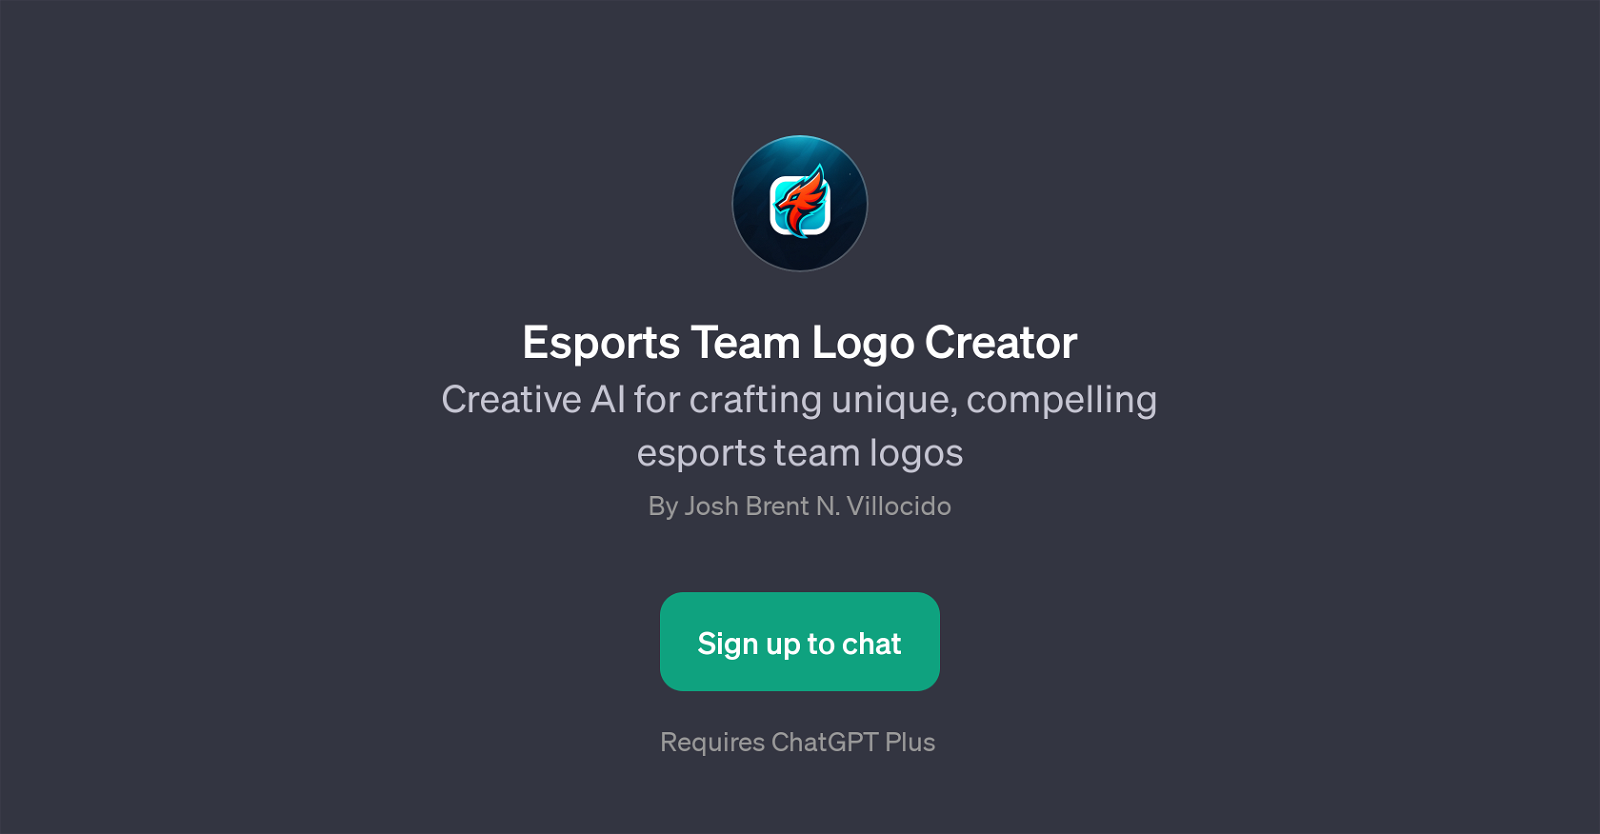 Esports Team Logo Creator website